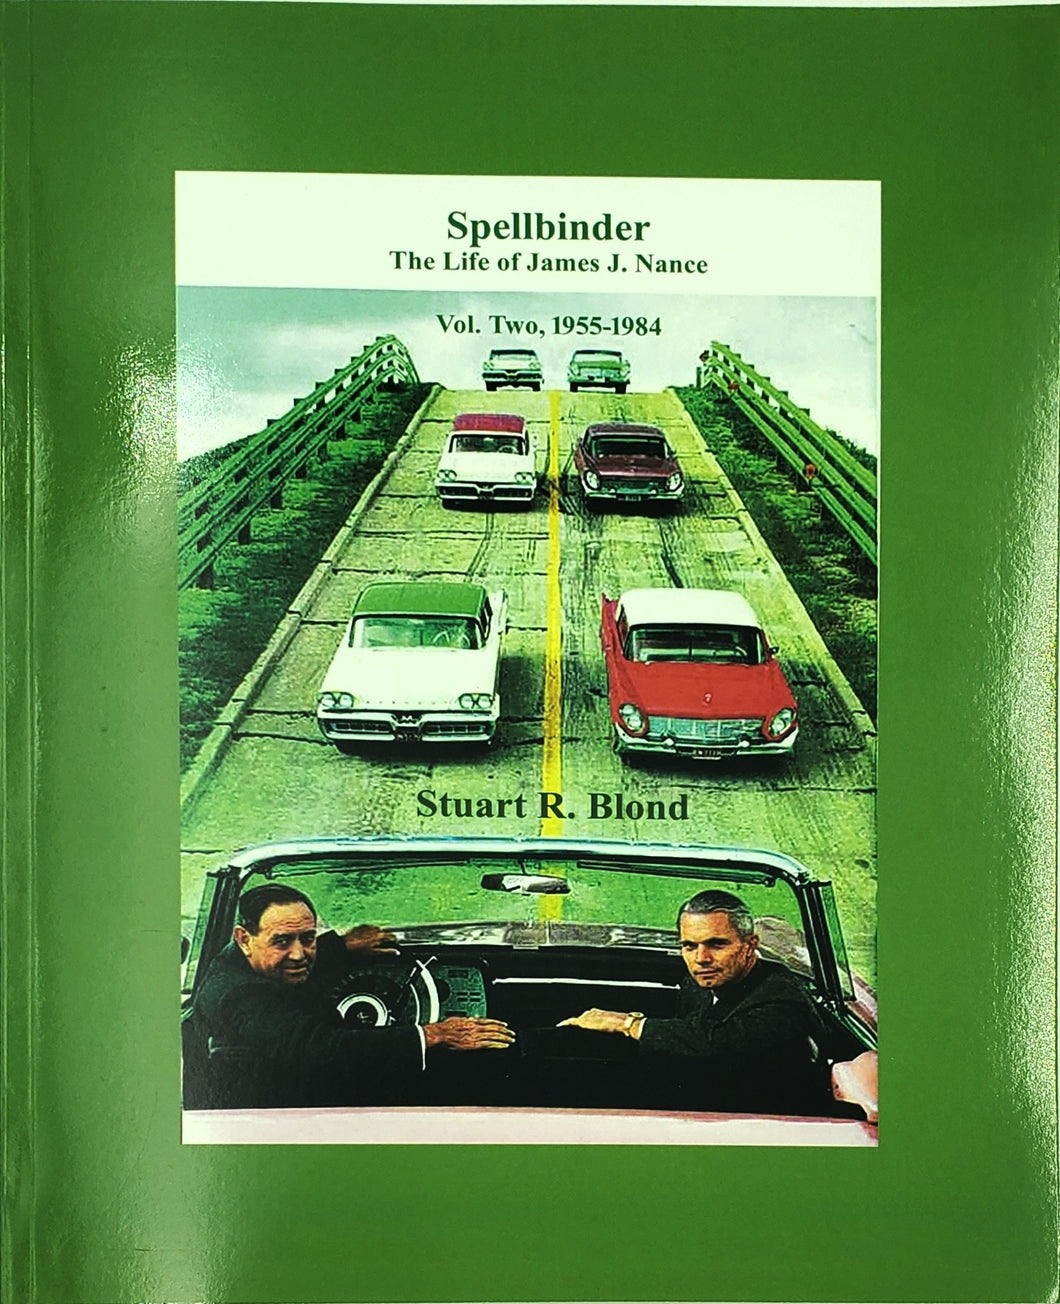 New Book: Spellbinder: The Life of James J. Nance Volume 2, 1955-1984 by Stuart R. Blond $35.95